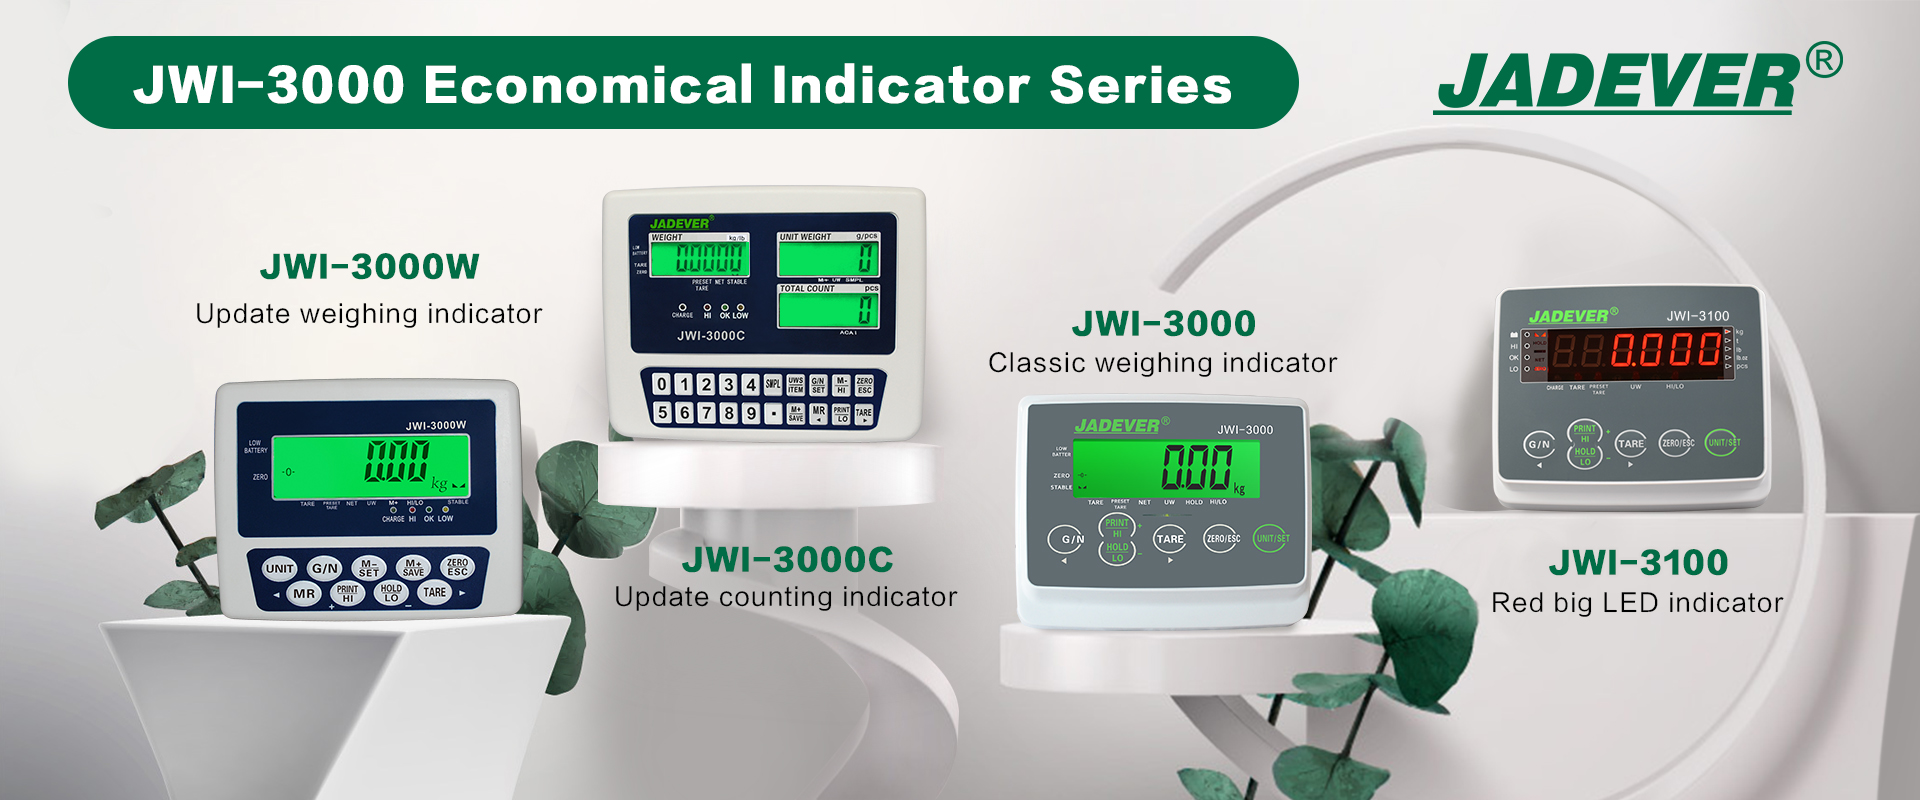 Jadever JWI-3000 Economical Indicator Series